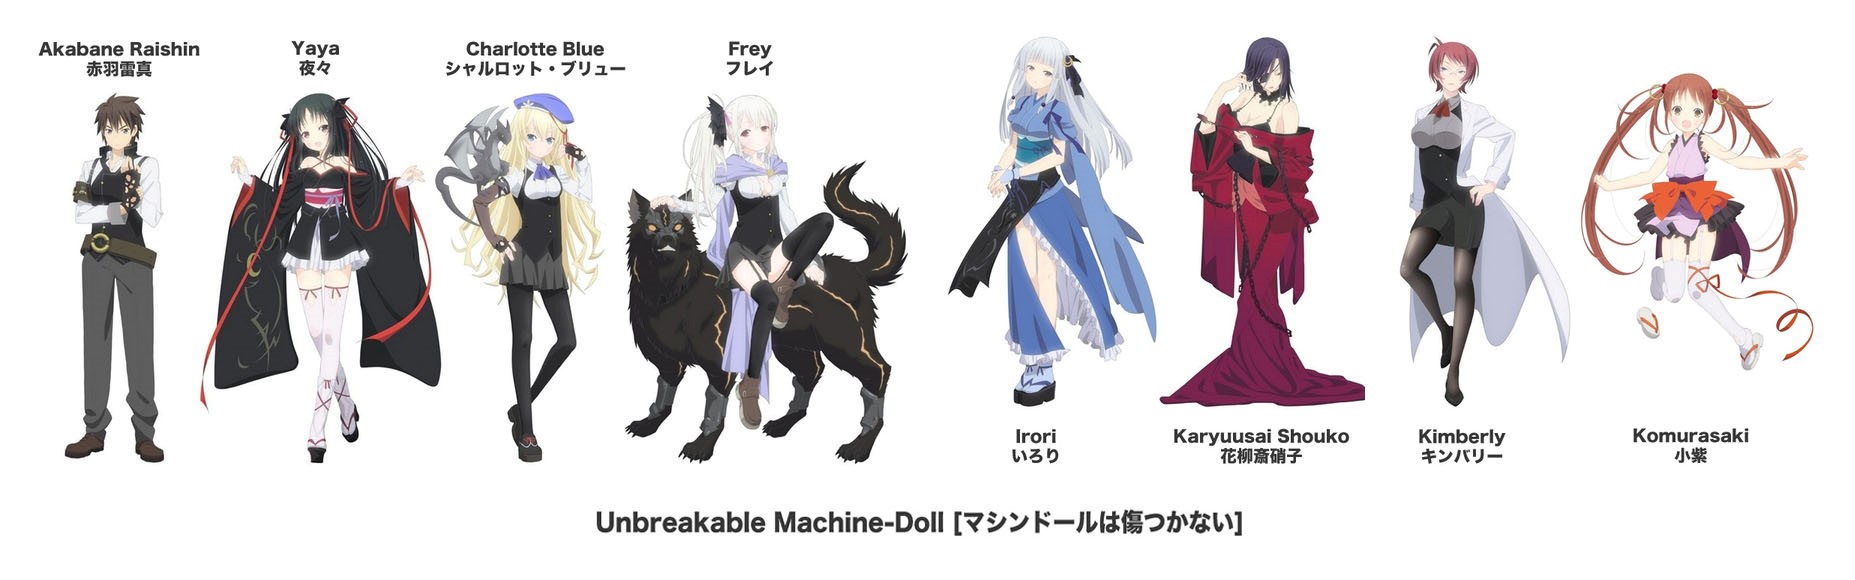 Unbreakable Machine-Doll Specials